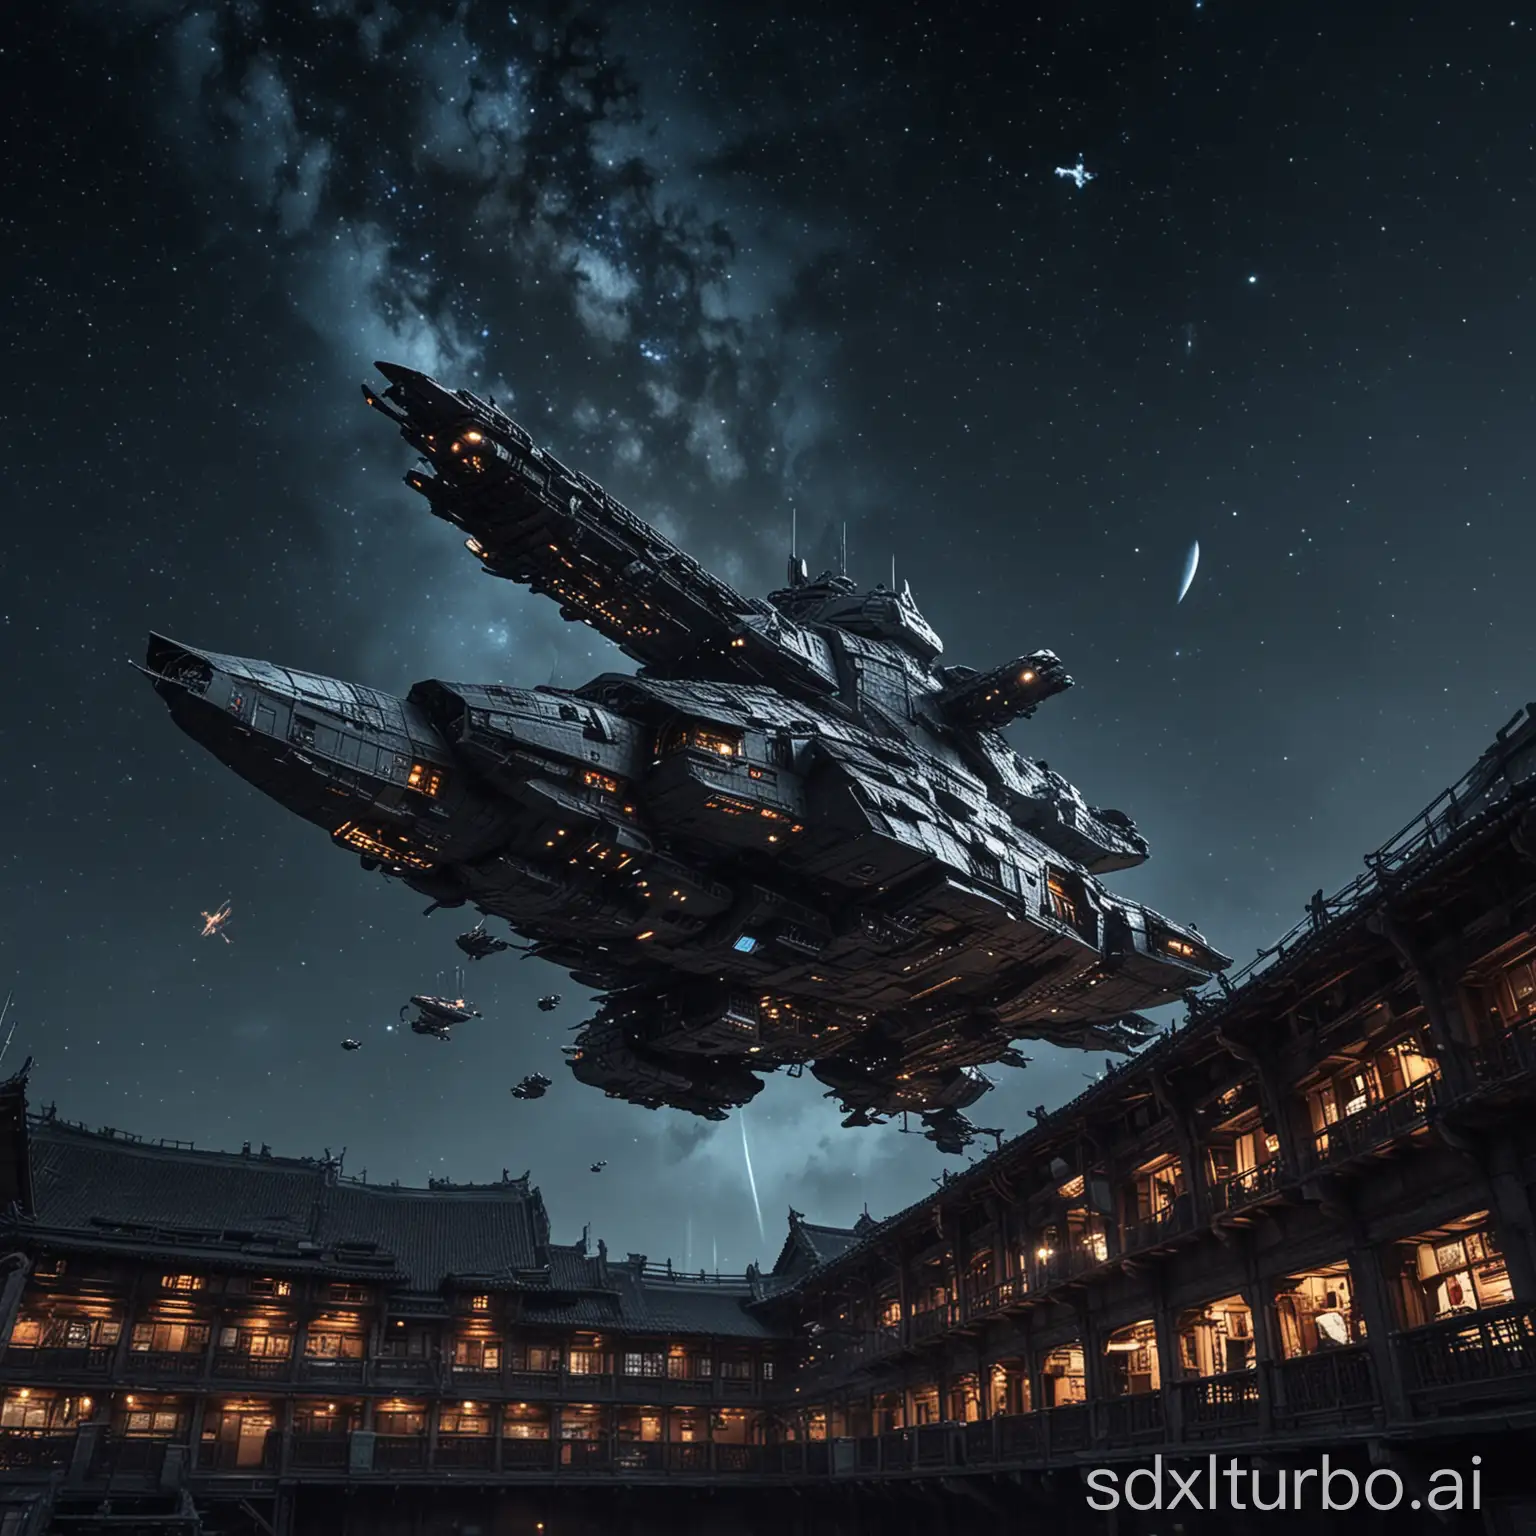 Intergalactic-Warships-Over-Minnan-Courtyard-at-Night